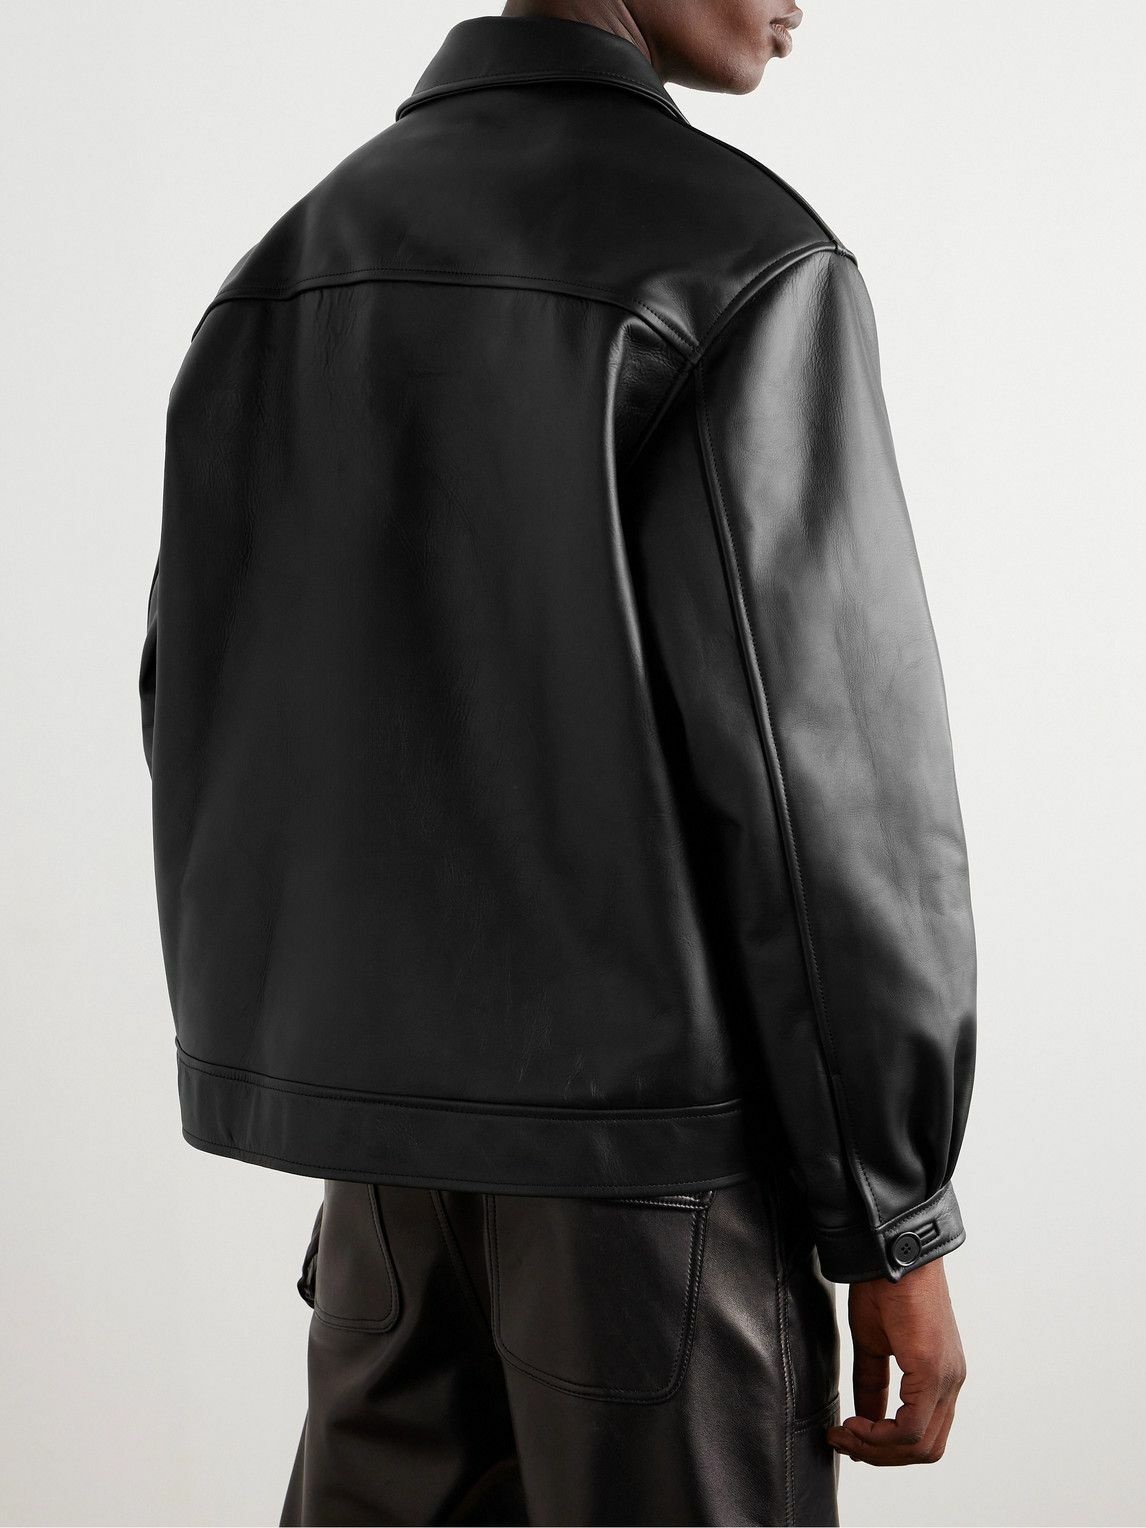 Simone Rocha - Macramé-Trimmed Leather Jacket - Black Simone Rocha